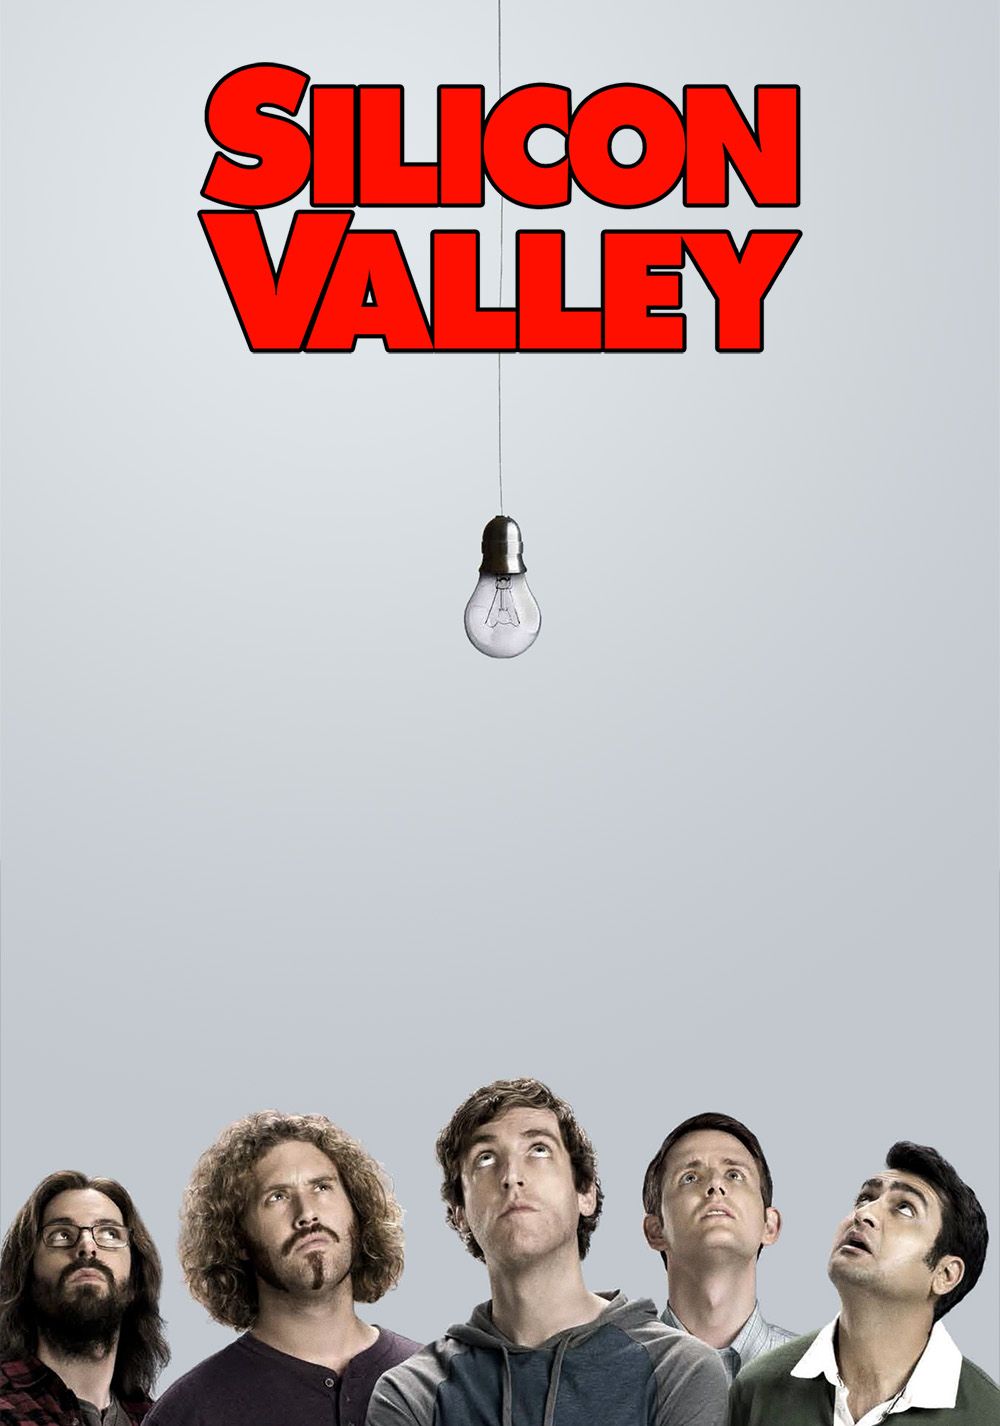 Silicon Valley comedy web series